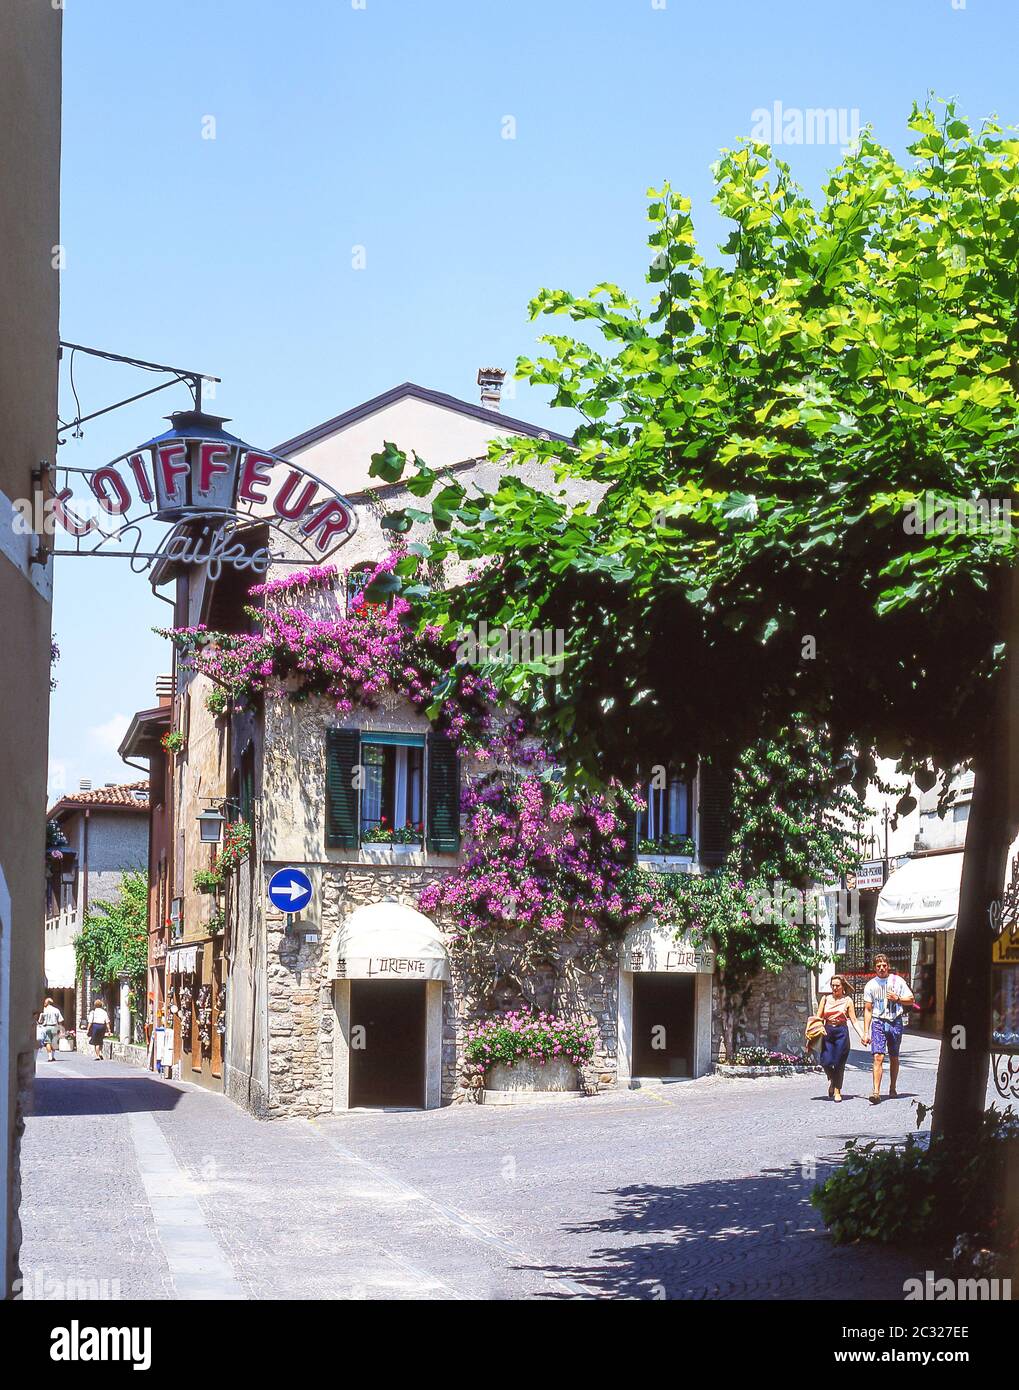 Street scene in Old Town, Sirmione, Lake Garda, Province of Brescia, Lombardy Region, Italy Stock Photo